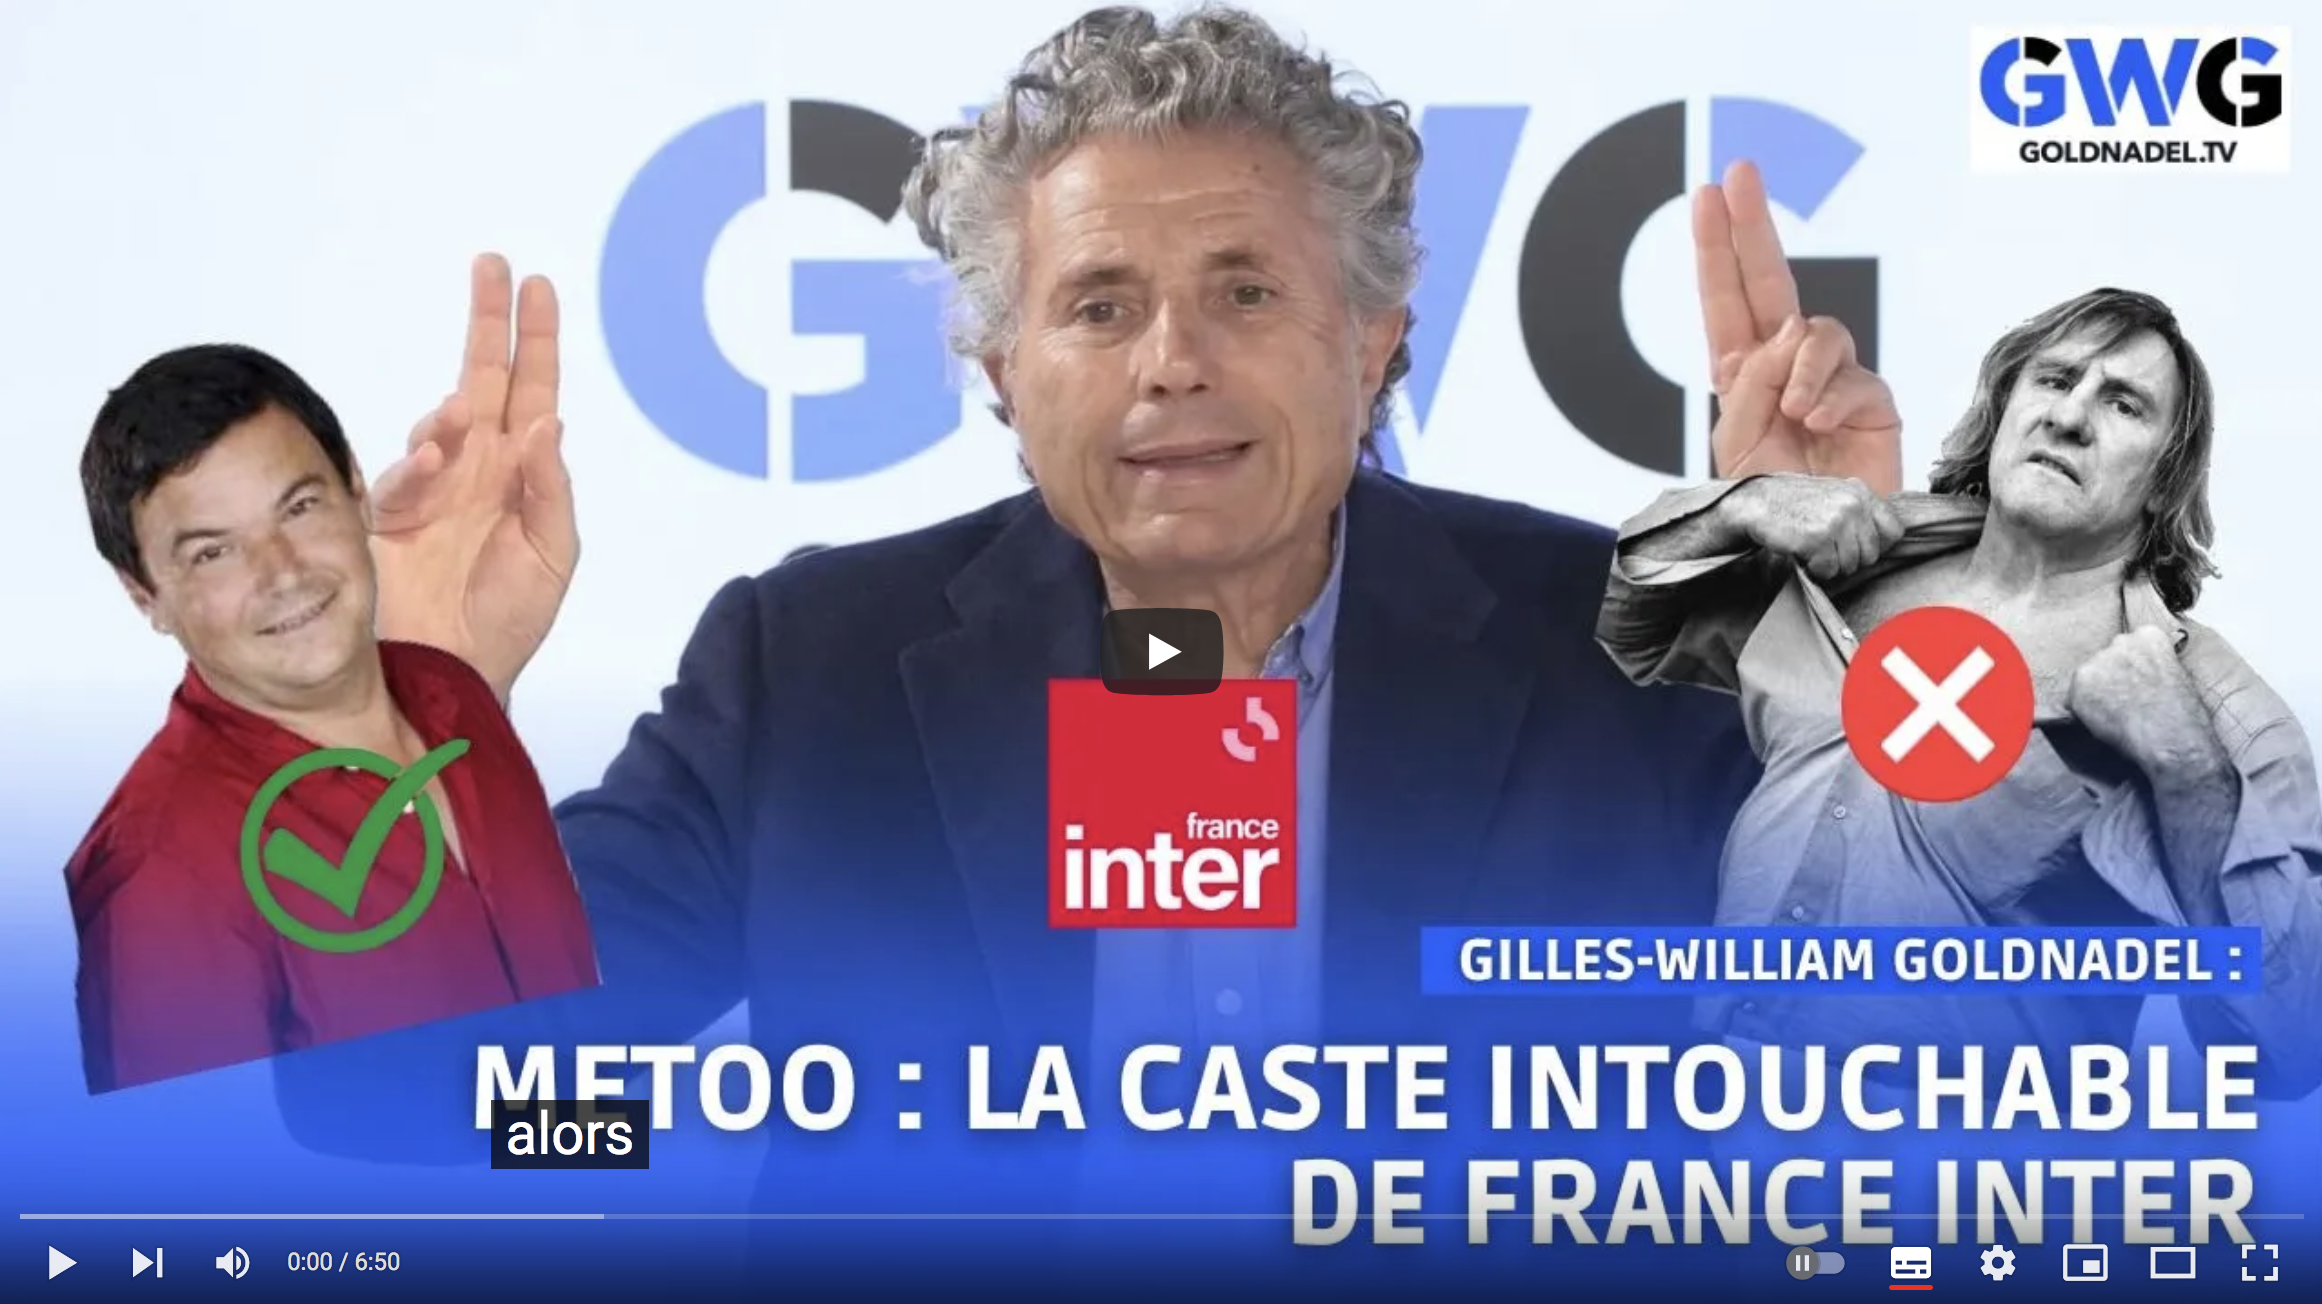 #MeToo : La caste intouchable de France Inter (Gilles-William Goldnadel)